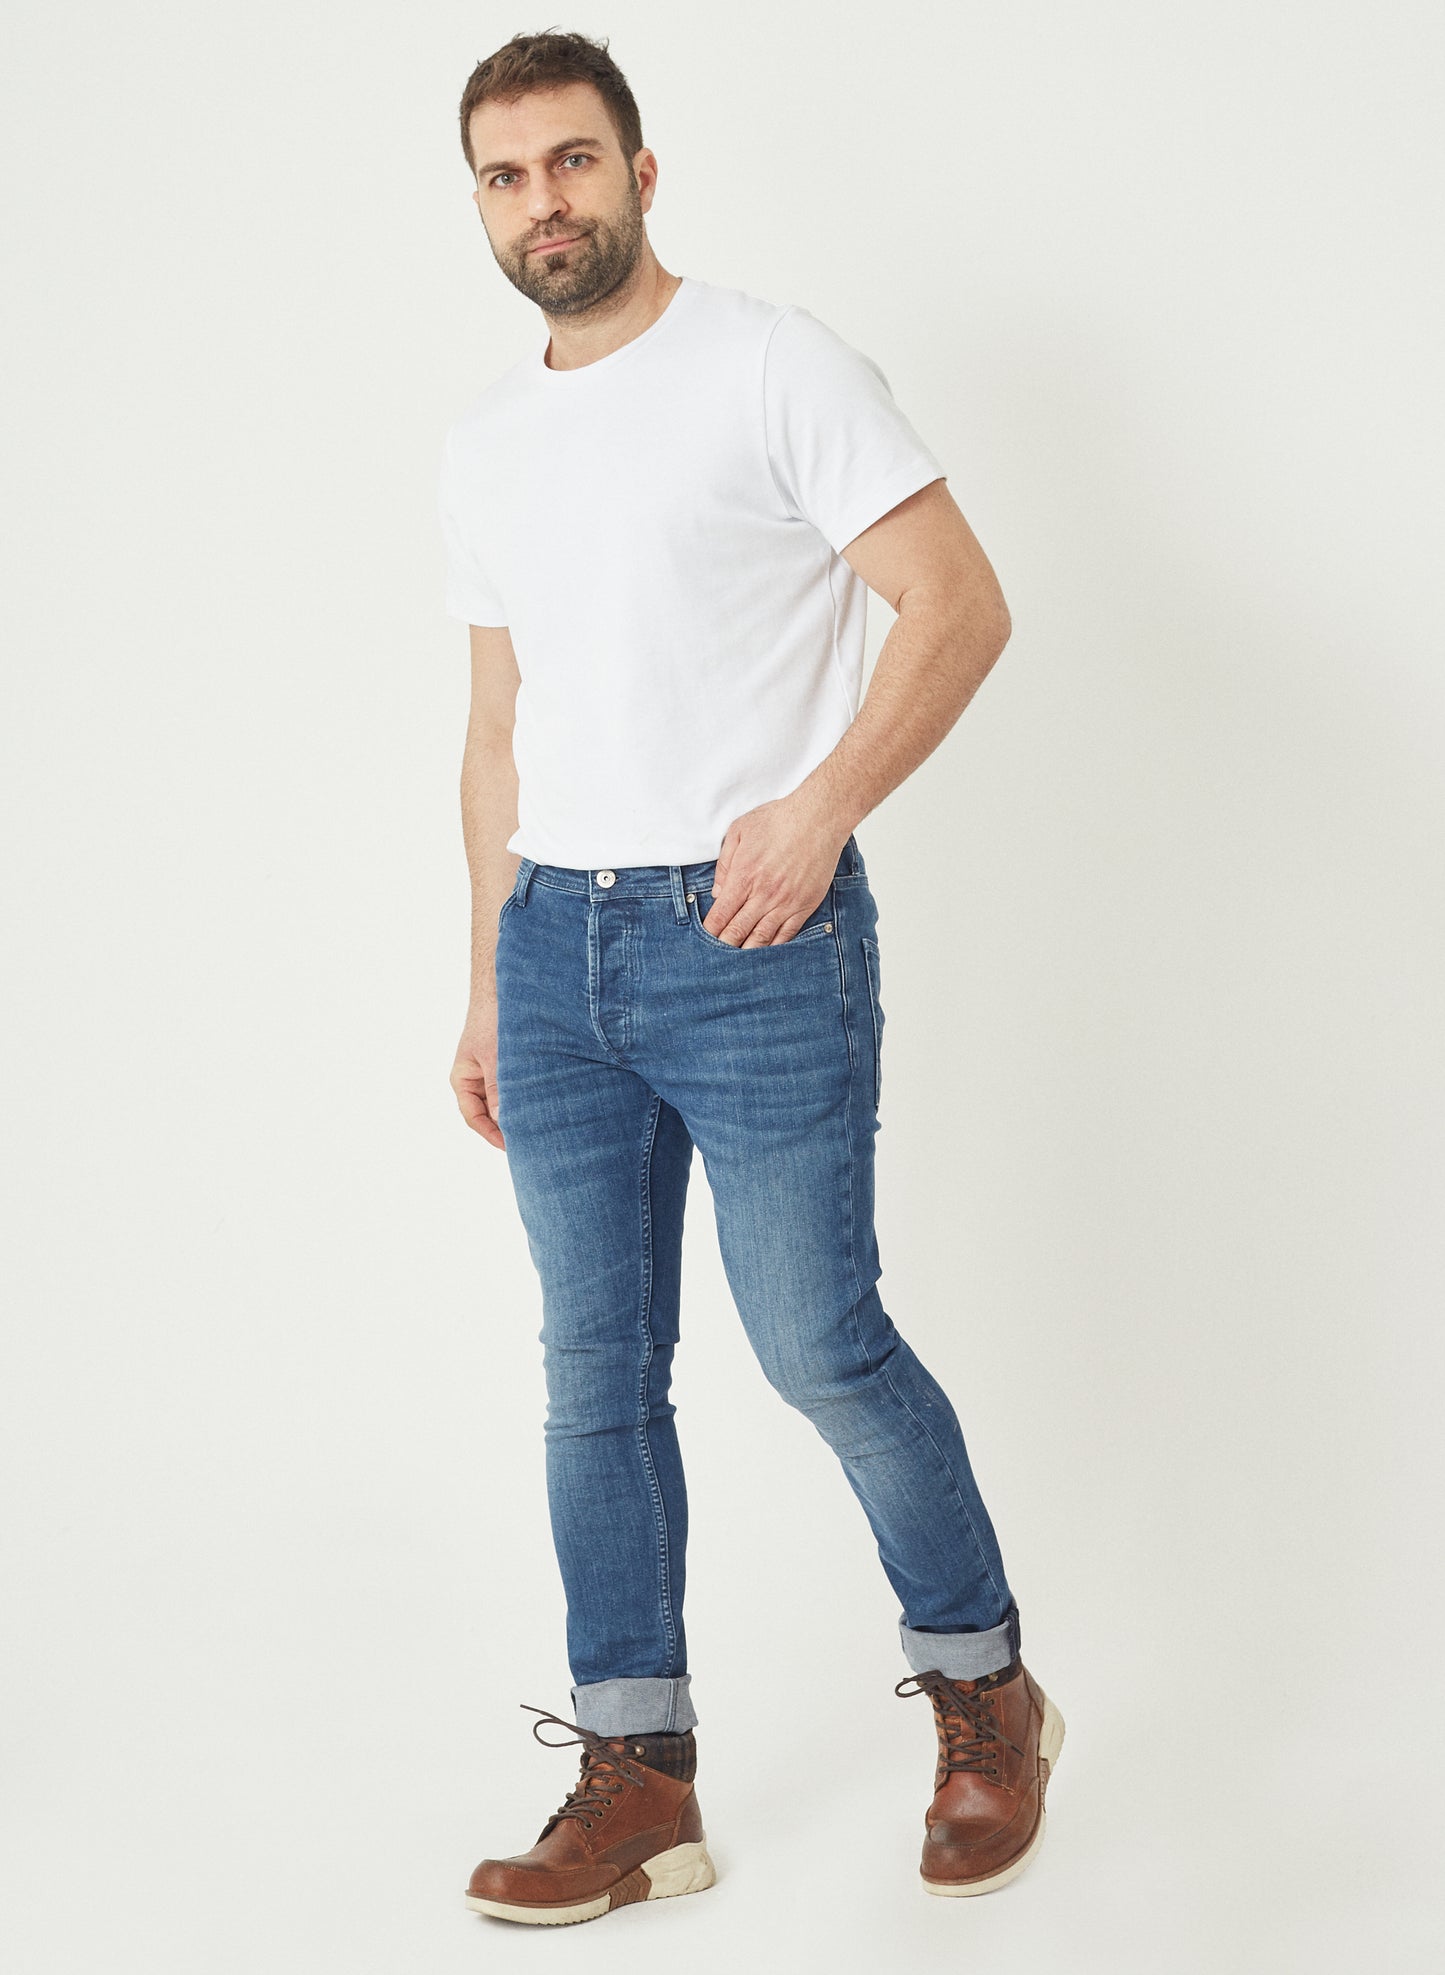 MINO - Slim Fit Denim Jeans Pant - Light Blue